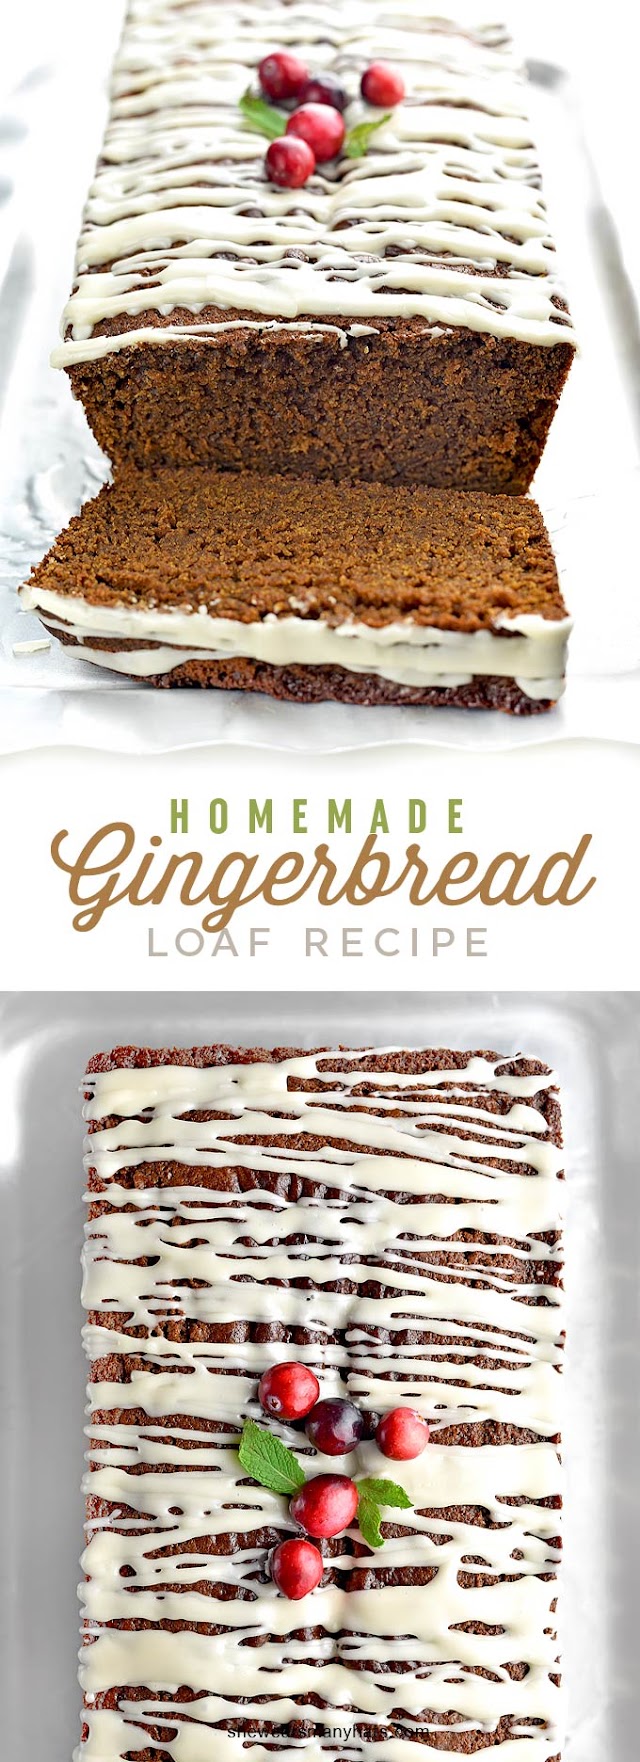 Homemade Gingerbread Loaf Recipe